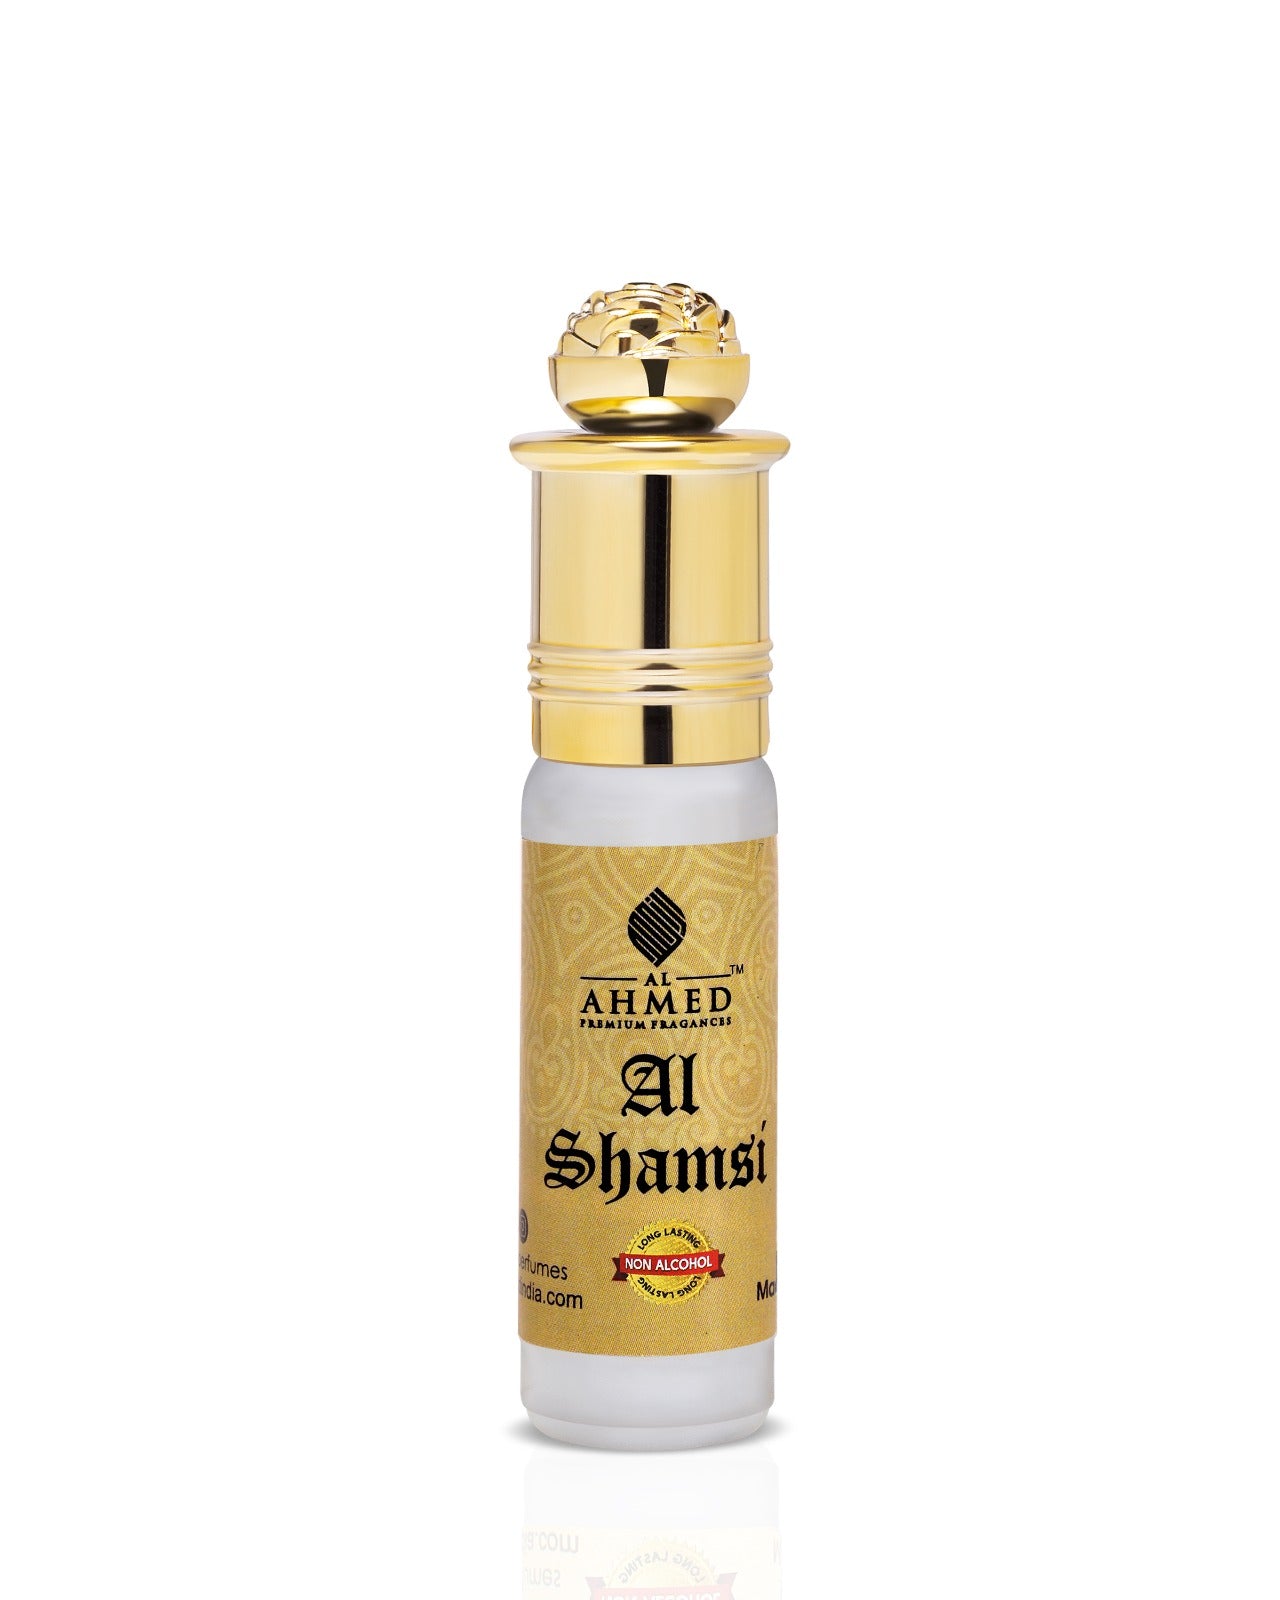 AL Ahmed's AL Sihams ATTAR ROLL ON PERFUME | LONG LASTING FRAGRANCE PERFUME FOR MEN AND WOMEN | 100% ALCOHOL FREE ATTAR PERFUME | 6ML)